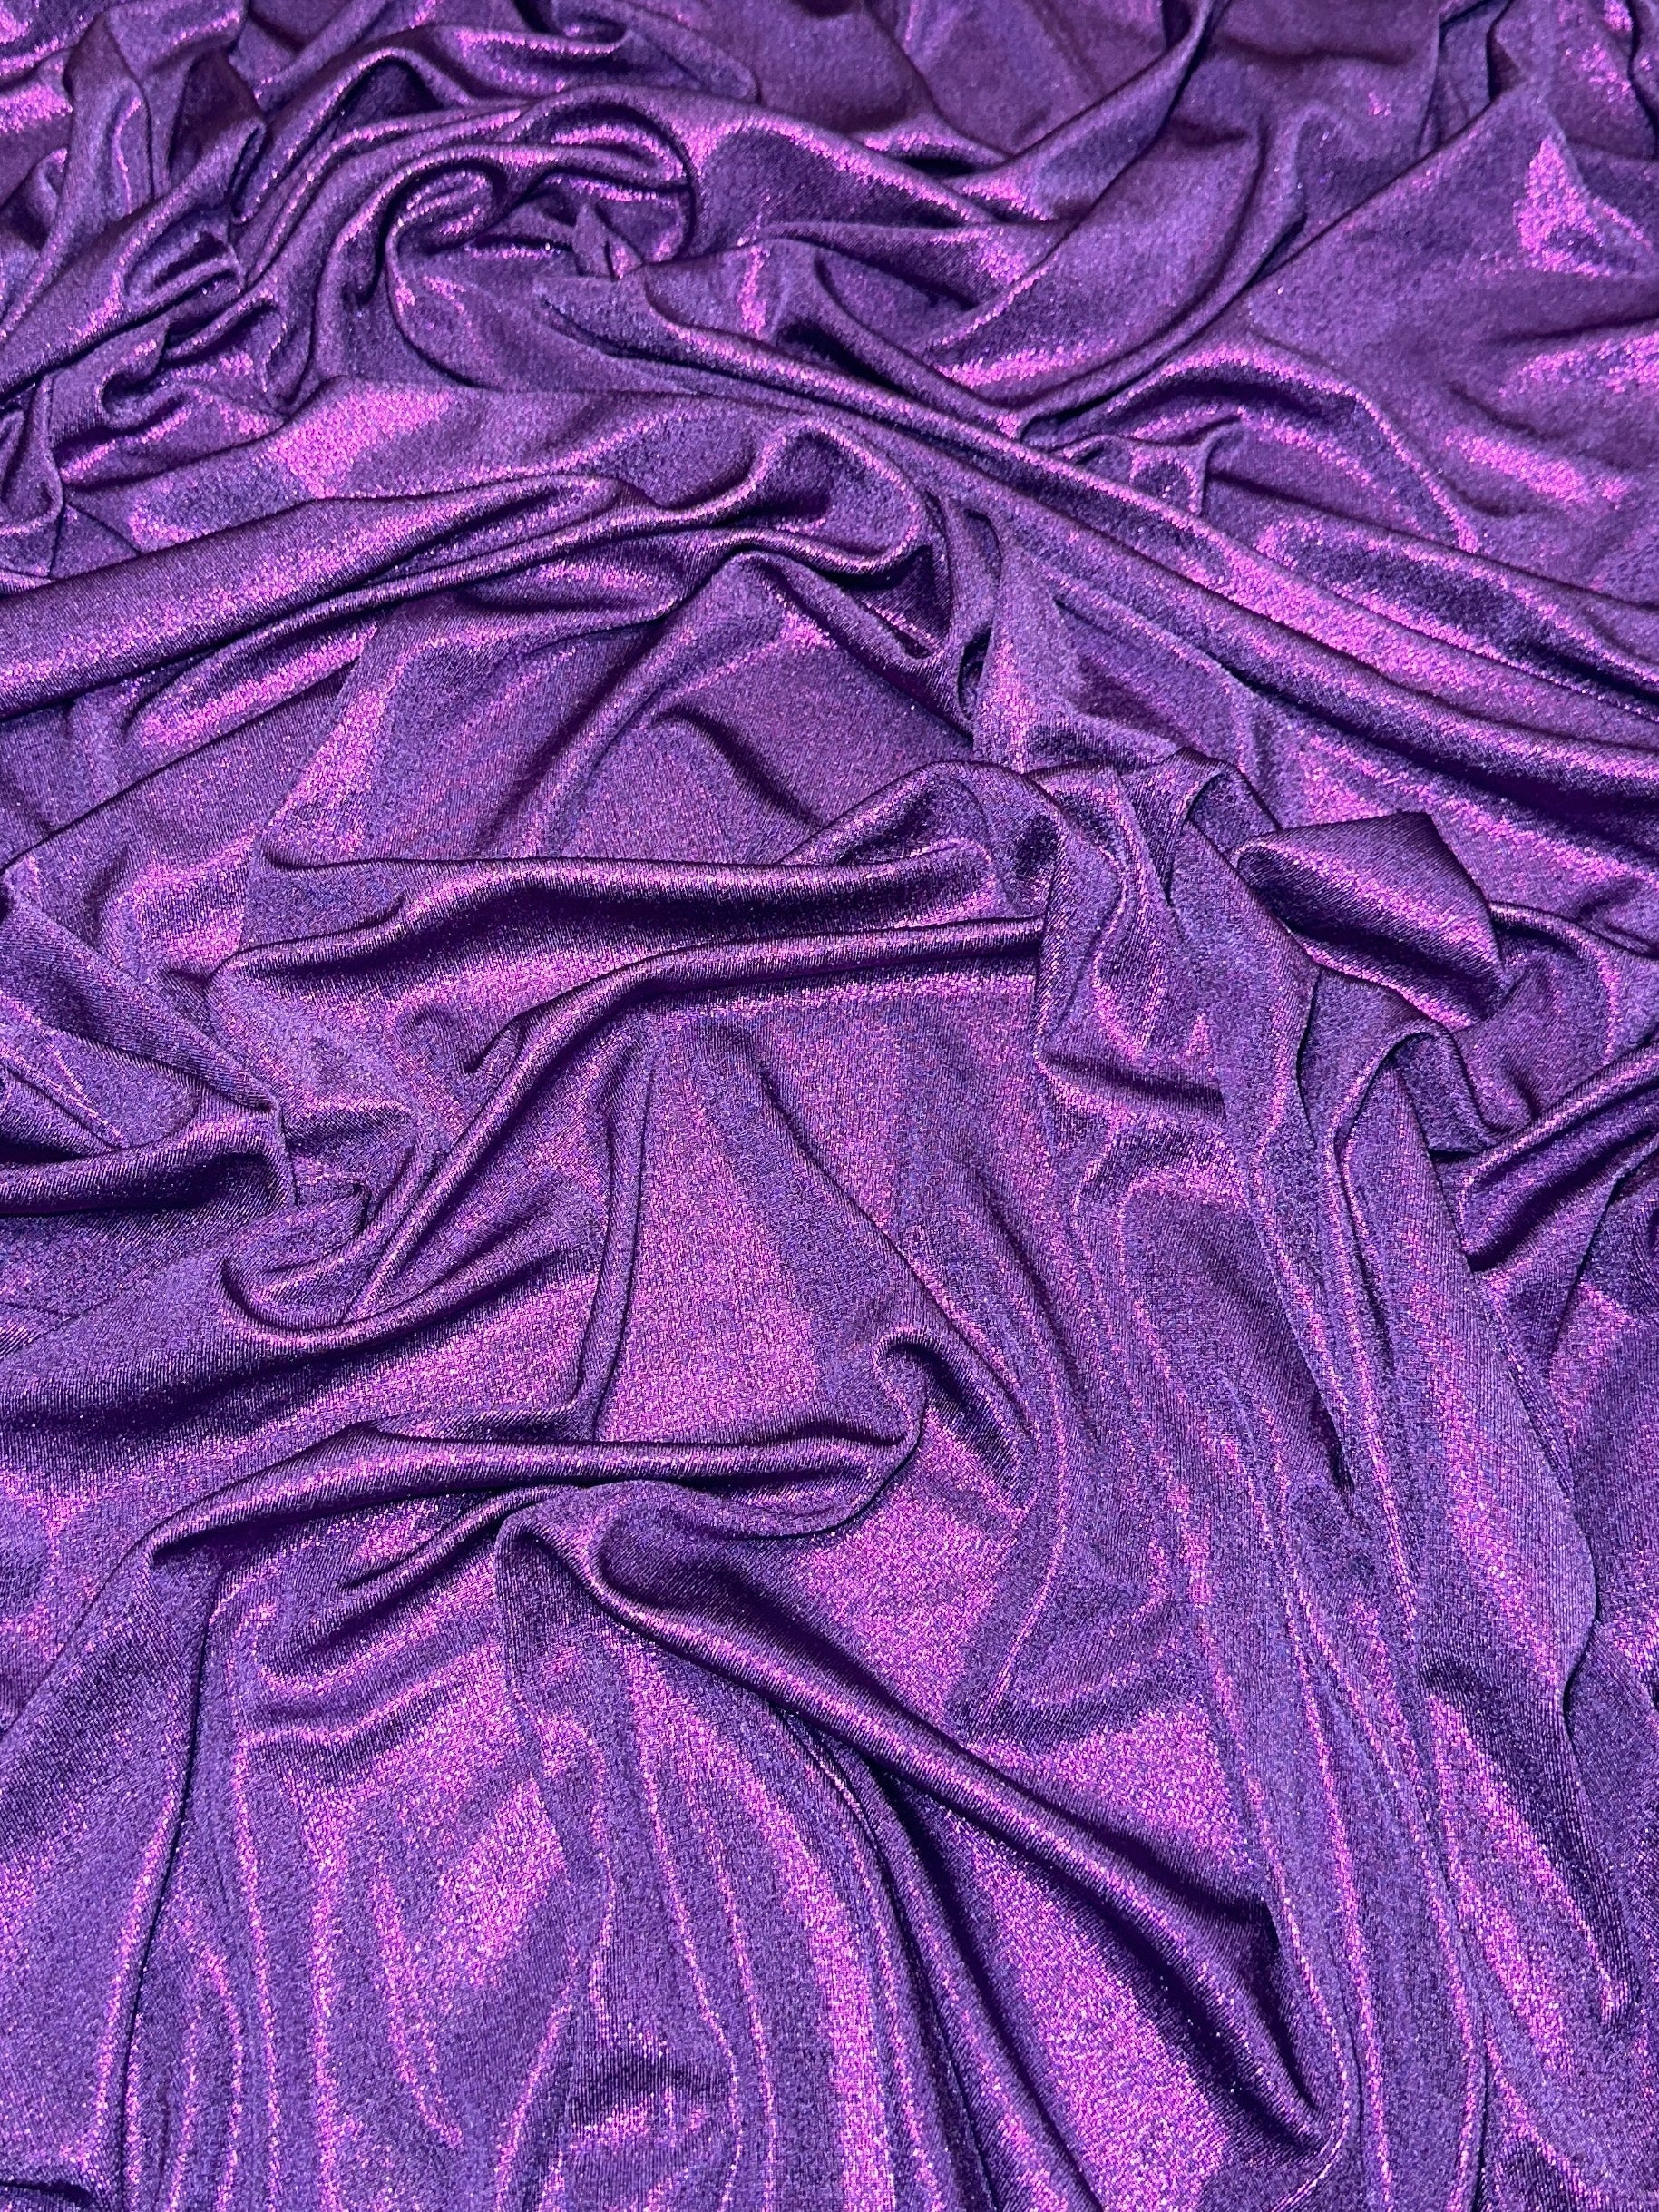 purple slinky foiled jersey, magenta foiled jersey, dark purple foiled jersey, light purple foiled jersey, foiled jersey for woman, foiled jersey on sale, foiled jersey on discount, best quality foiled jersey